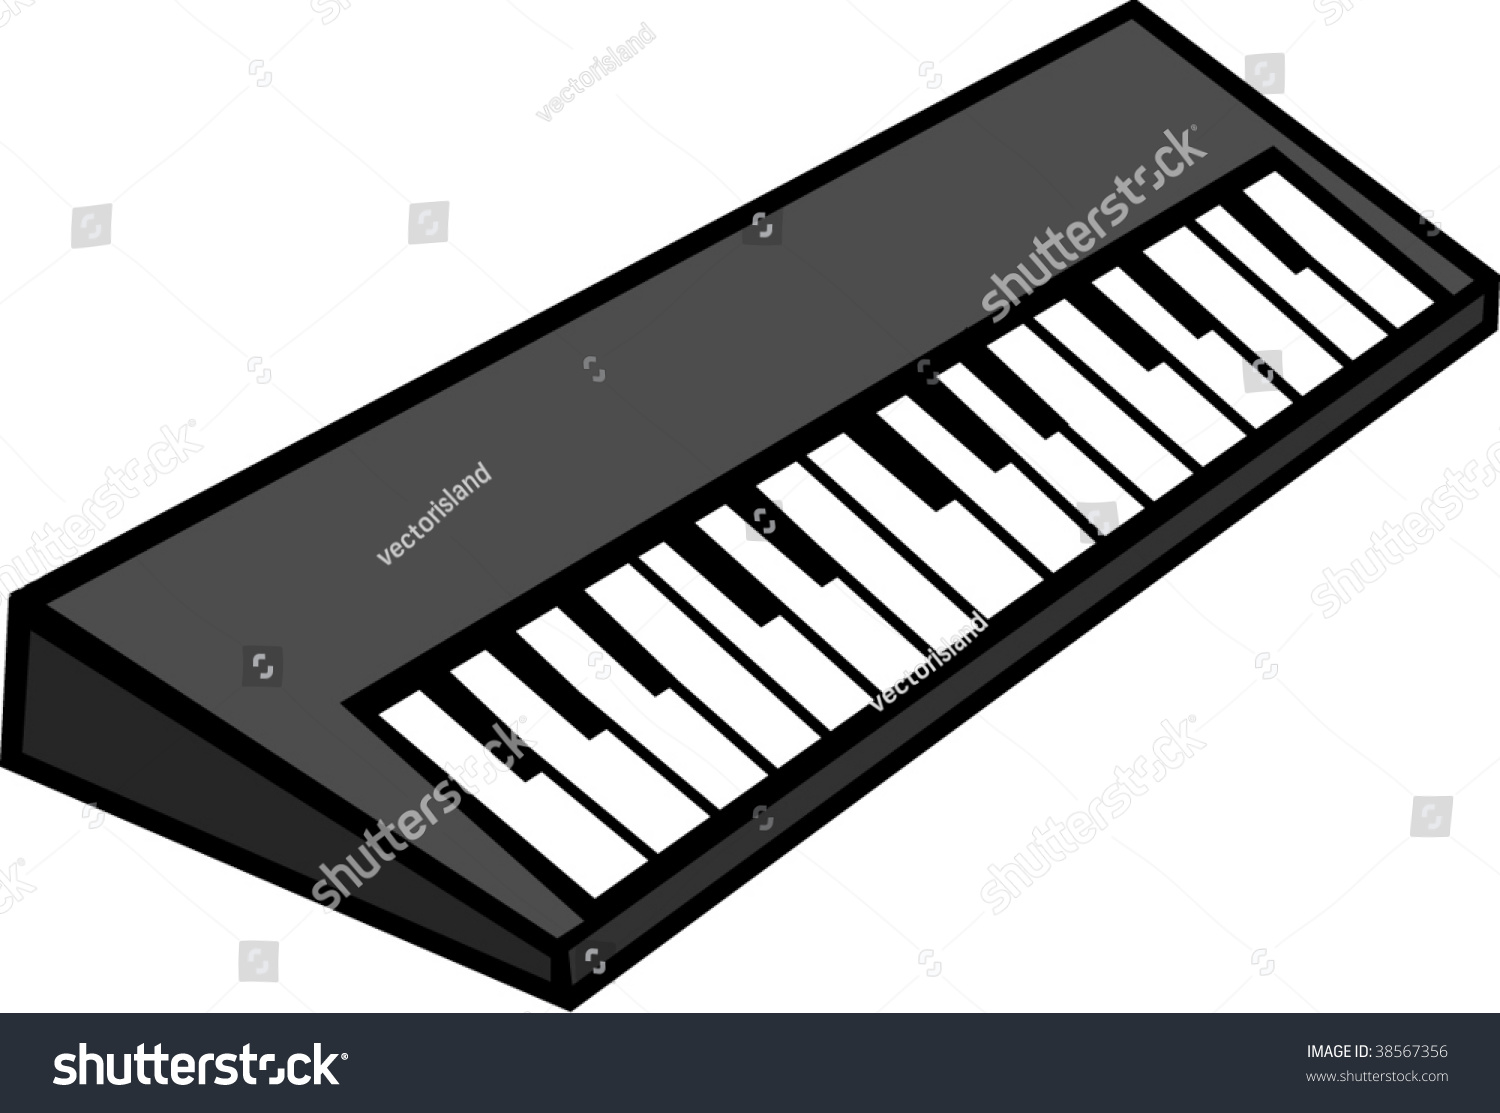 electronic keyboard clipart - photo #19